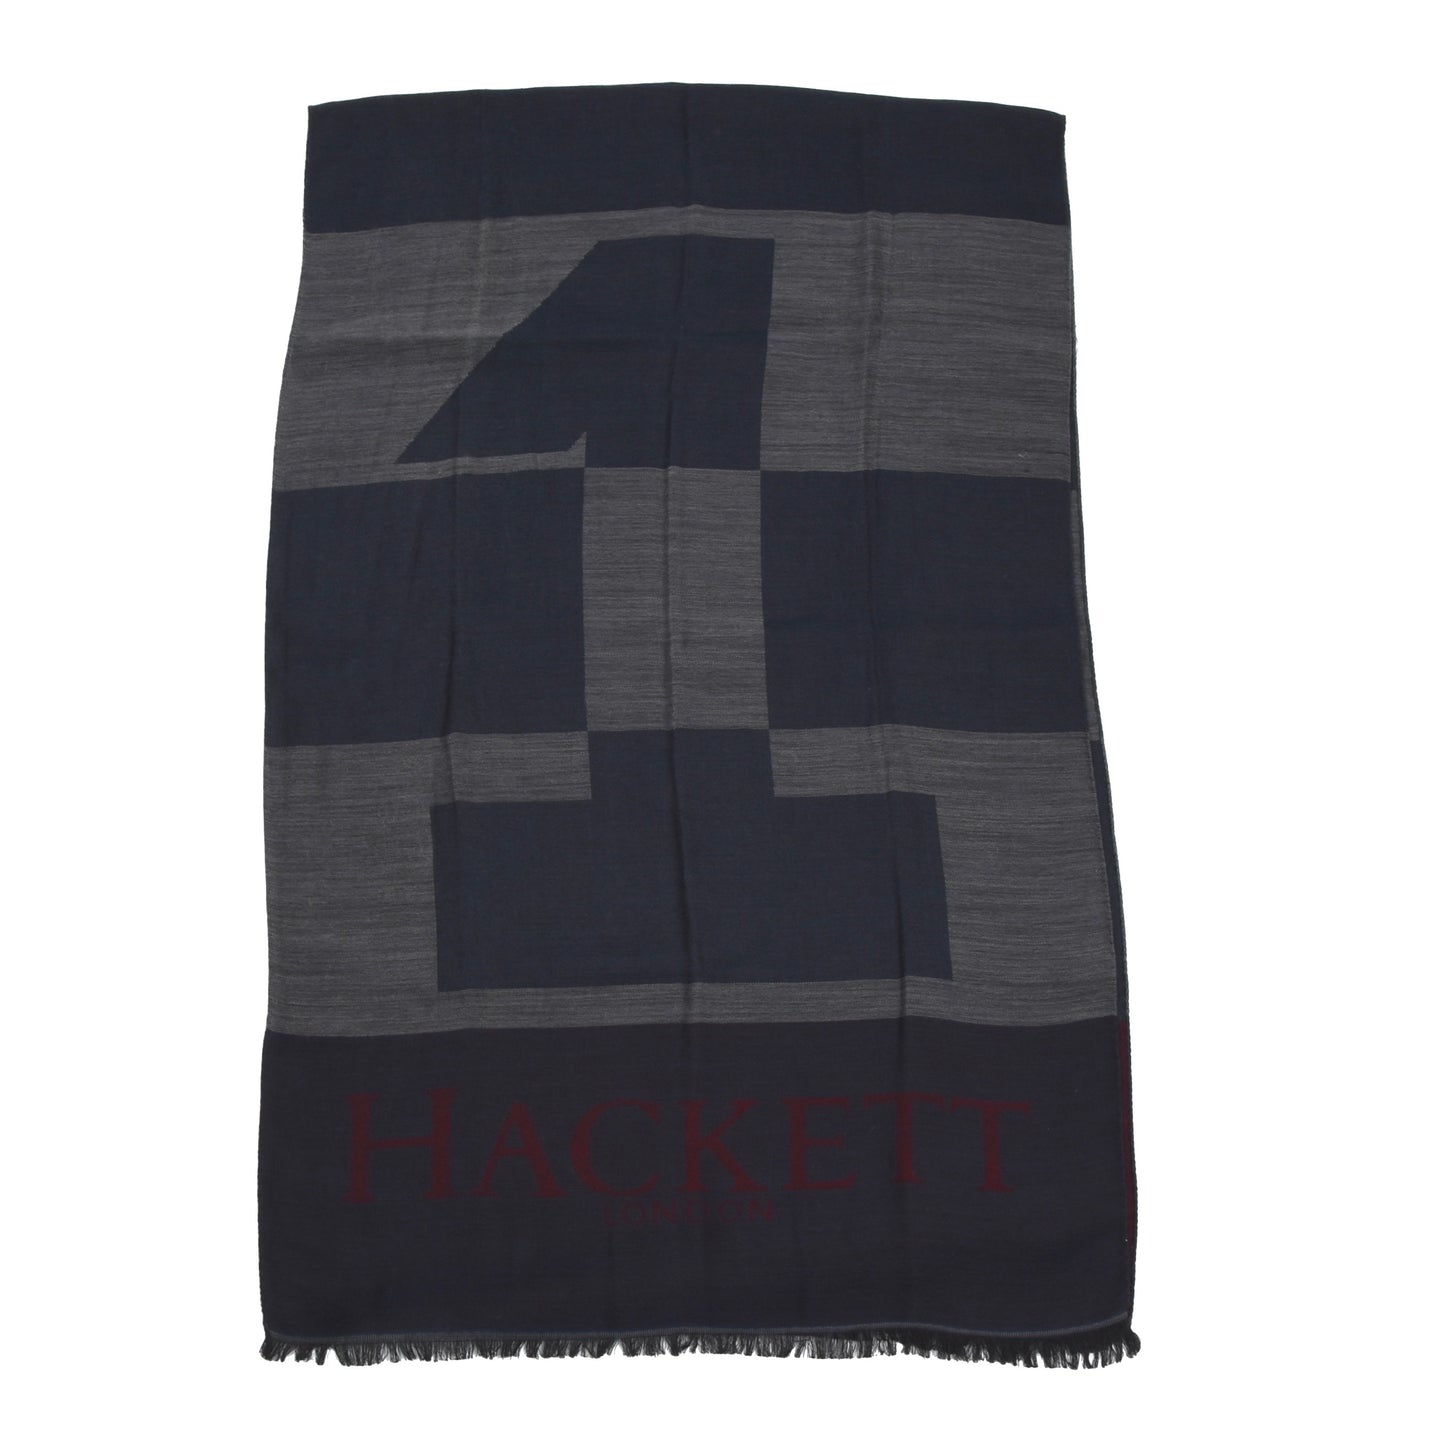 Hackett London #1 Schal - Navy/Grau